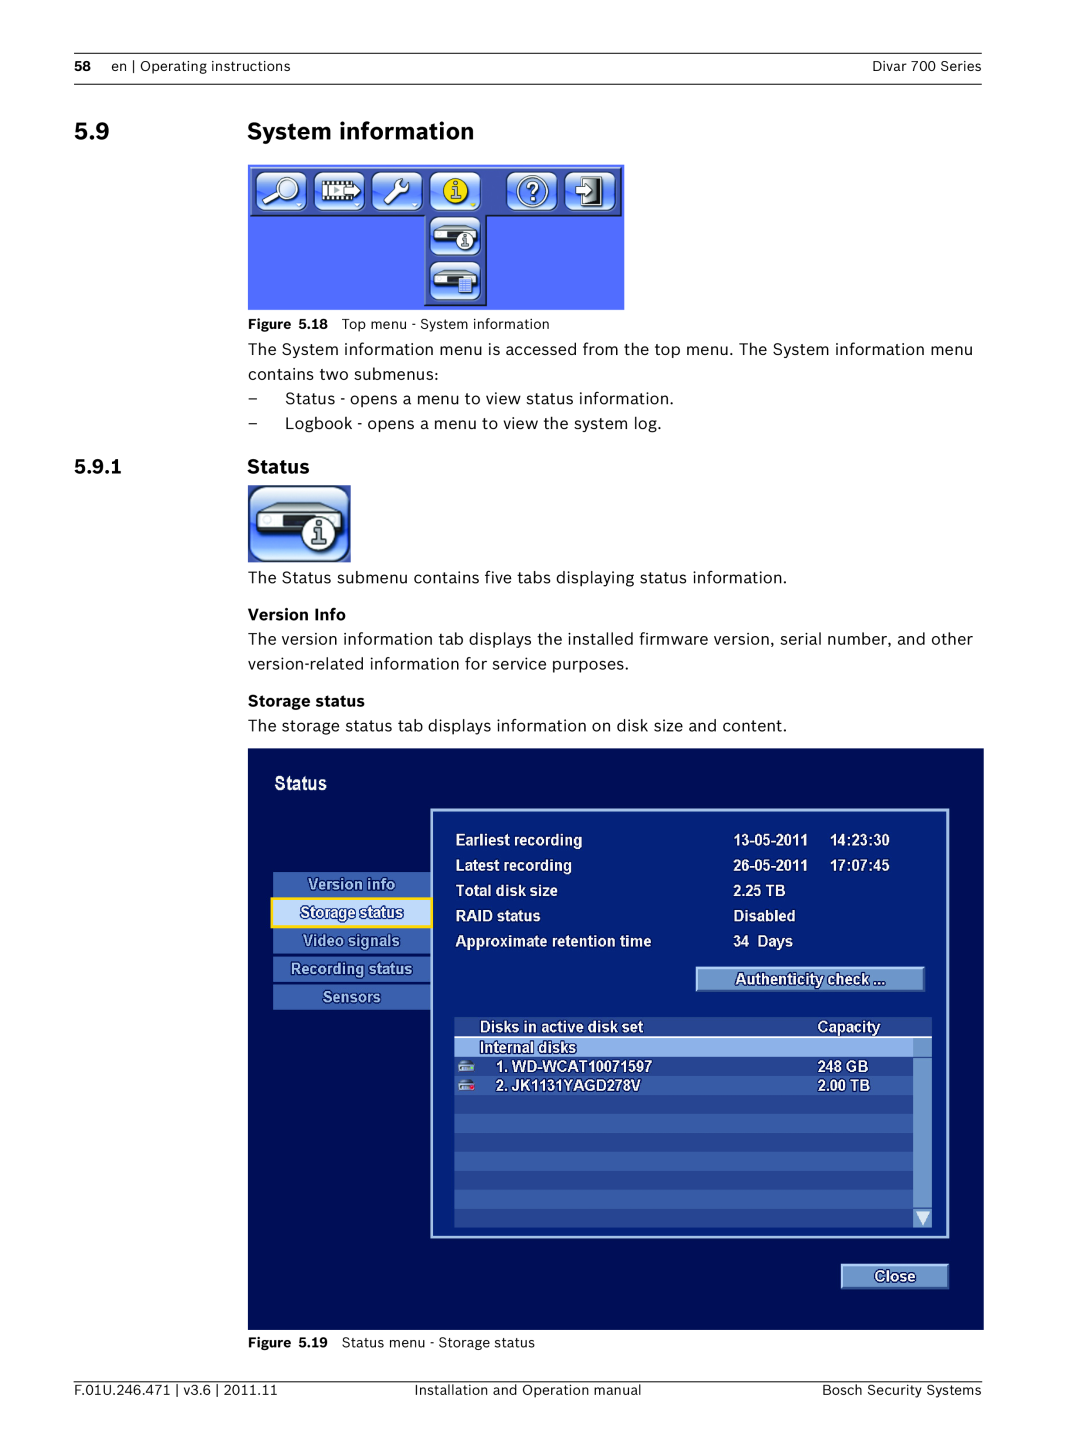 Bosch Appliances 700 operation manual System information, 5.9.1Status, Version Info, Storage status 